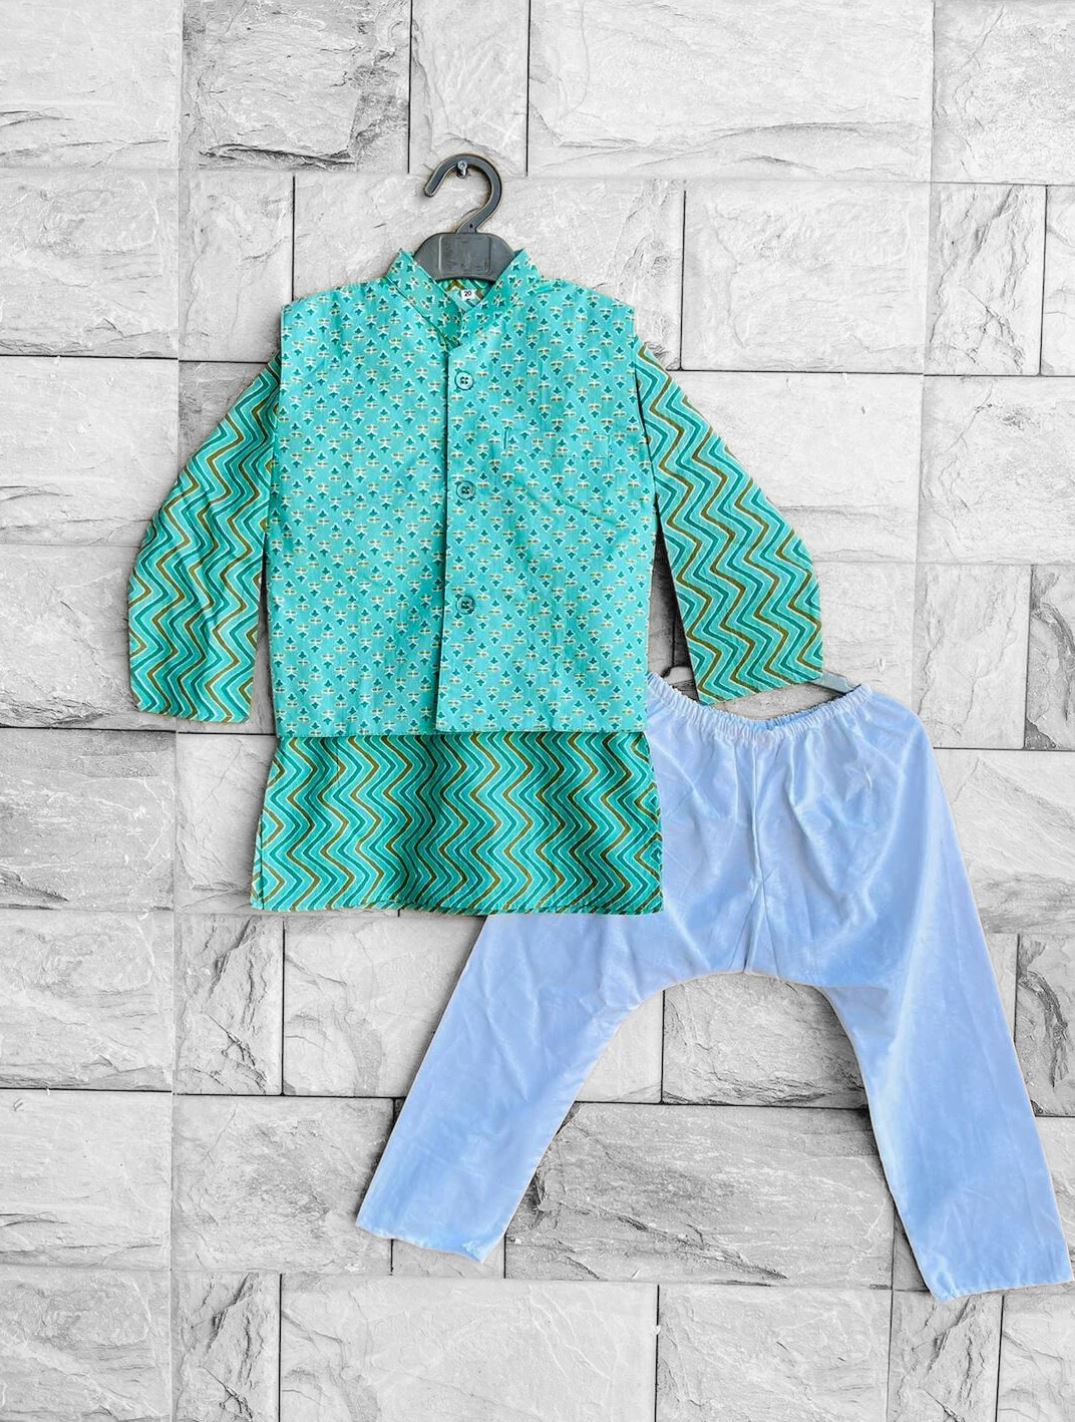 Bagru Inspired Nehru Jacket and Kurta Pajama Set